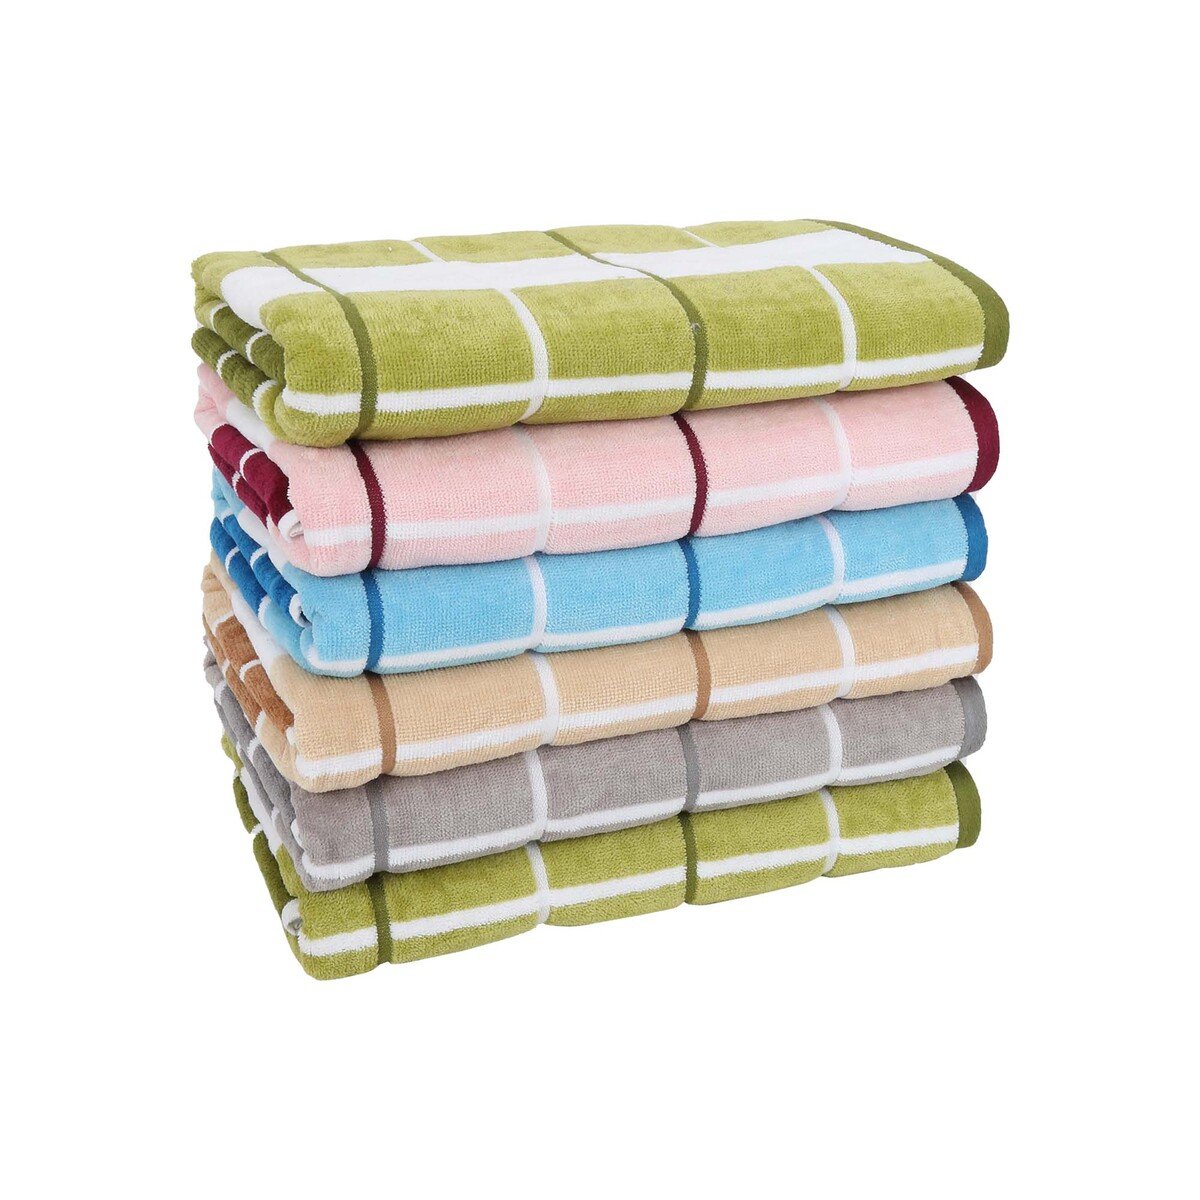 Homewell Cotton Bath Towel Dobby 70x140cm HW450 Assorted Per pc